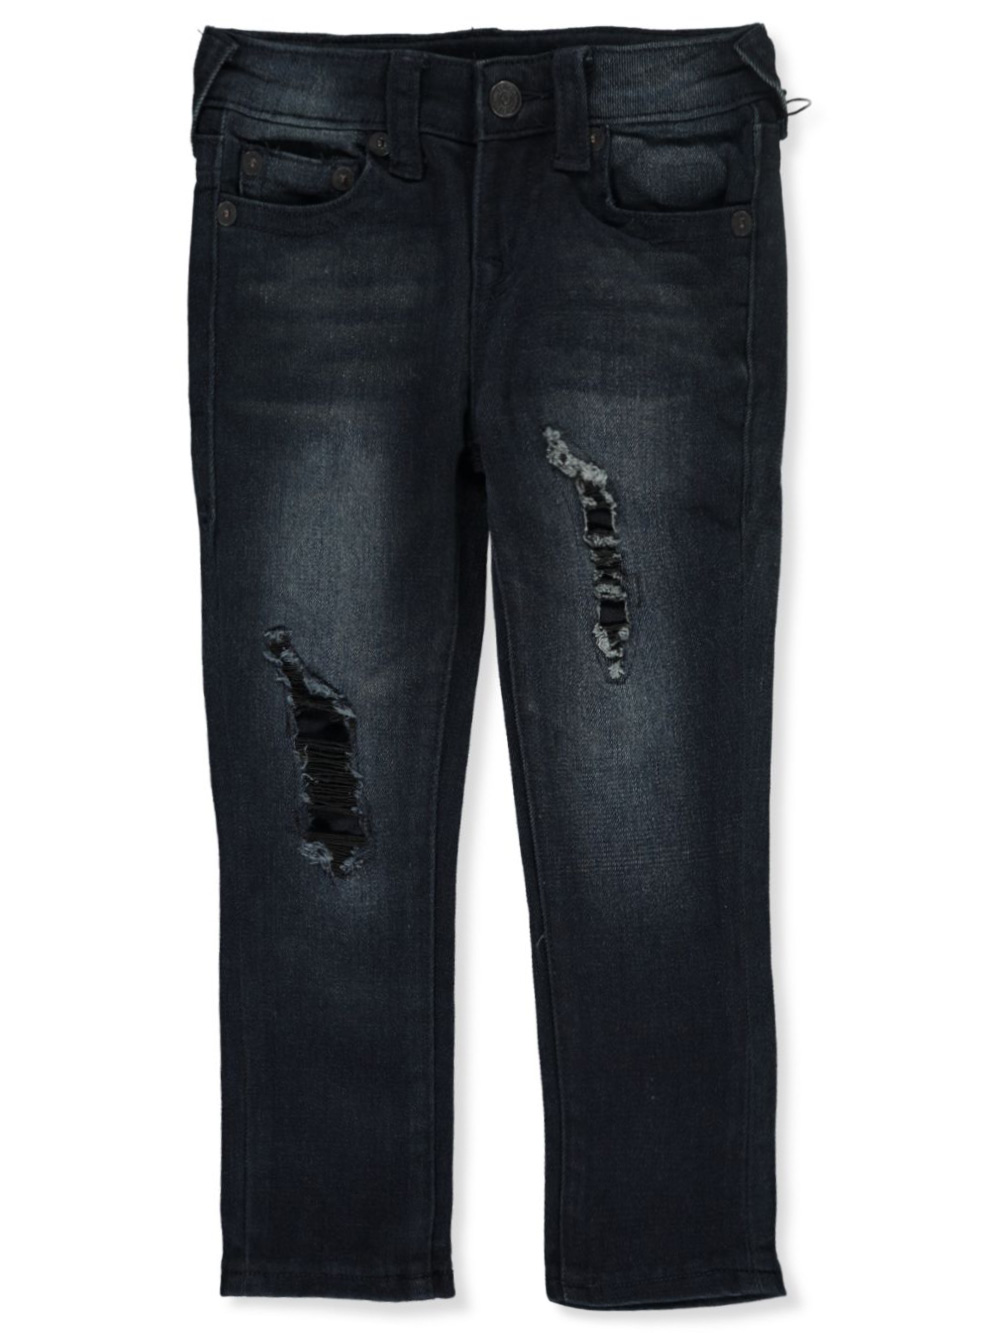 true religion black ripped jeans